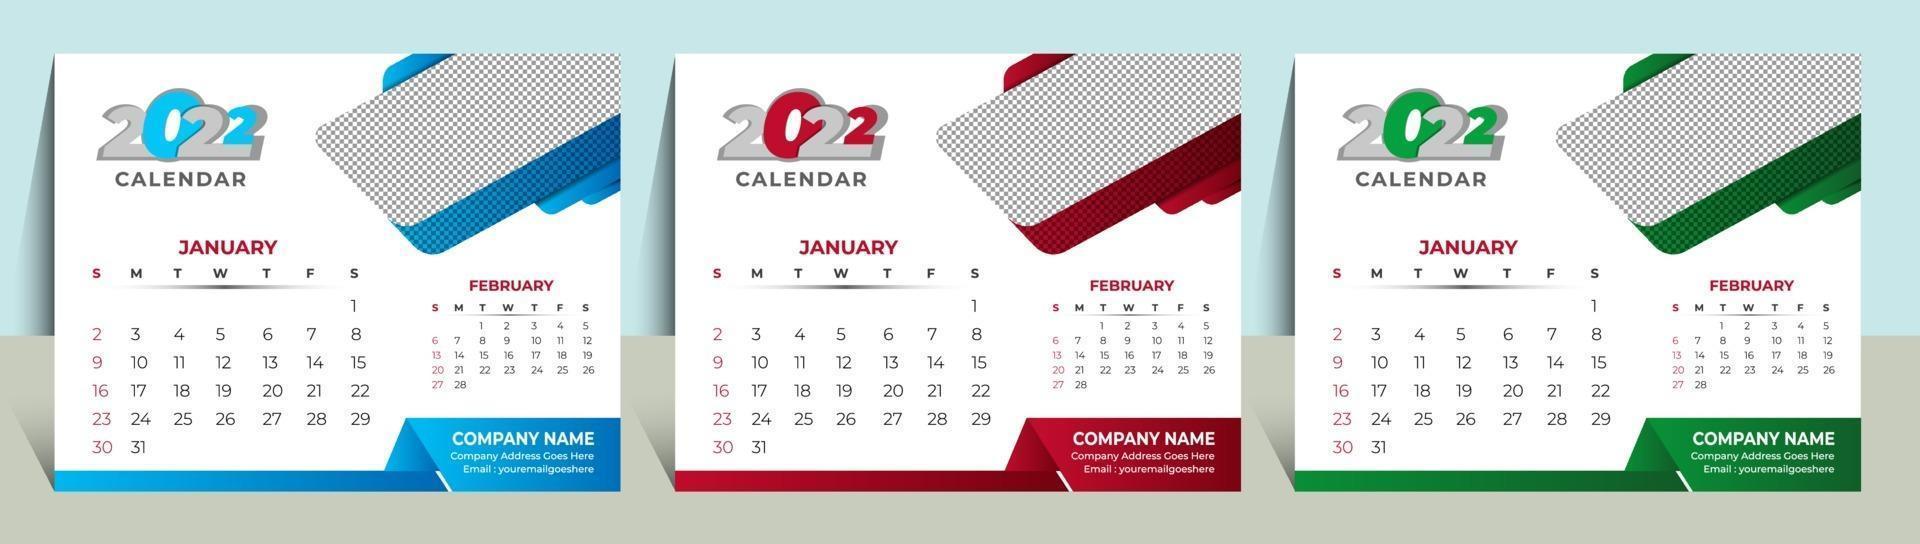 2022 Calendar Template Wall Calendar 2022 Vector Desk Calendar Design